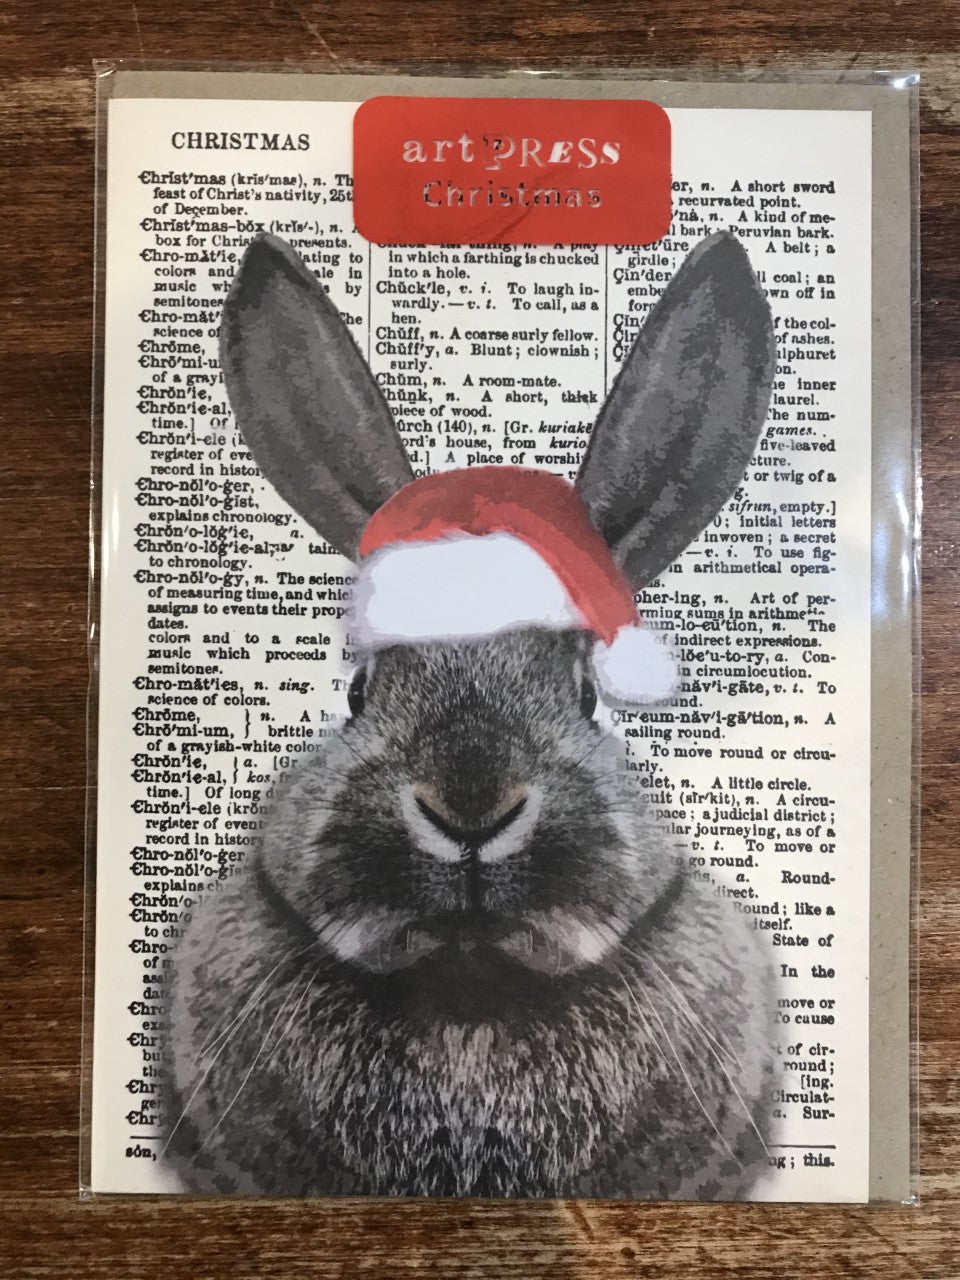 Art Press Christmas Card-Santa's Little Hopper